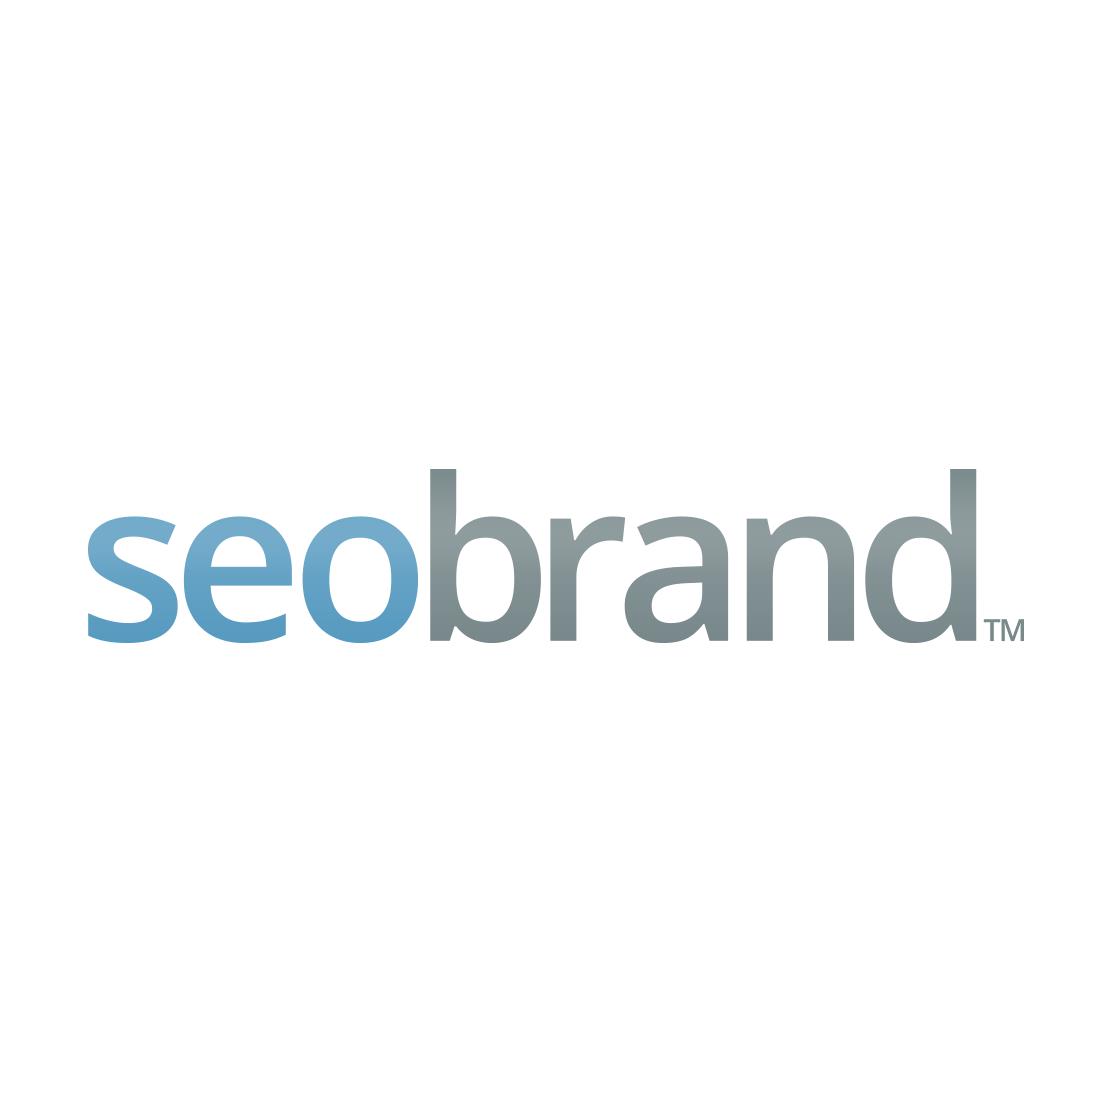 Best NYC SEO Business Logo: SEO Brand